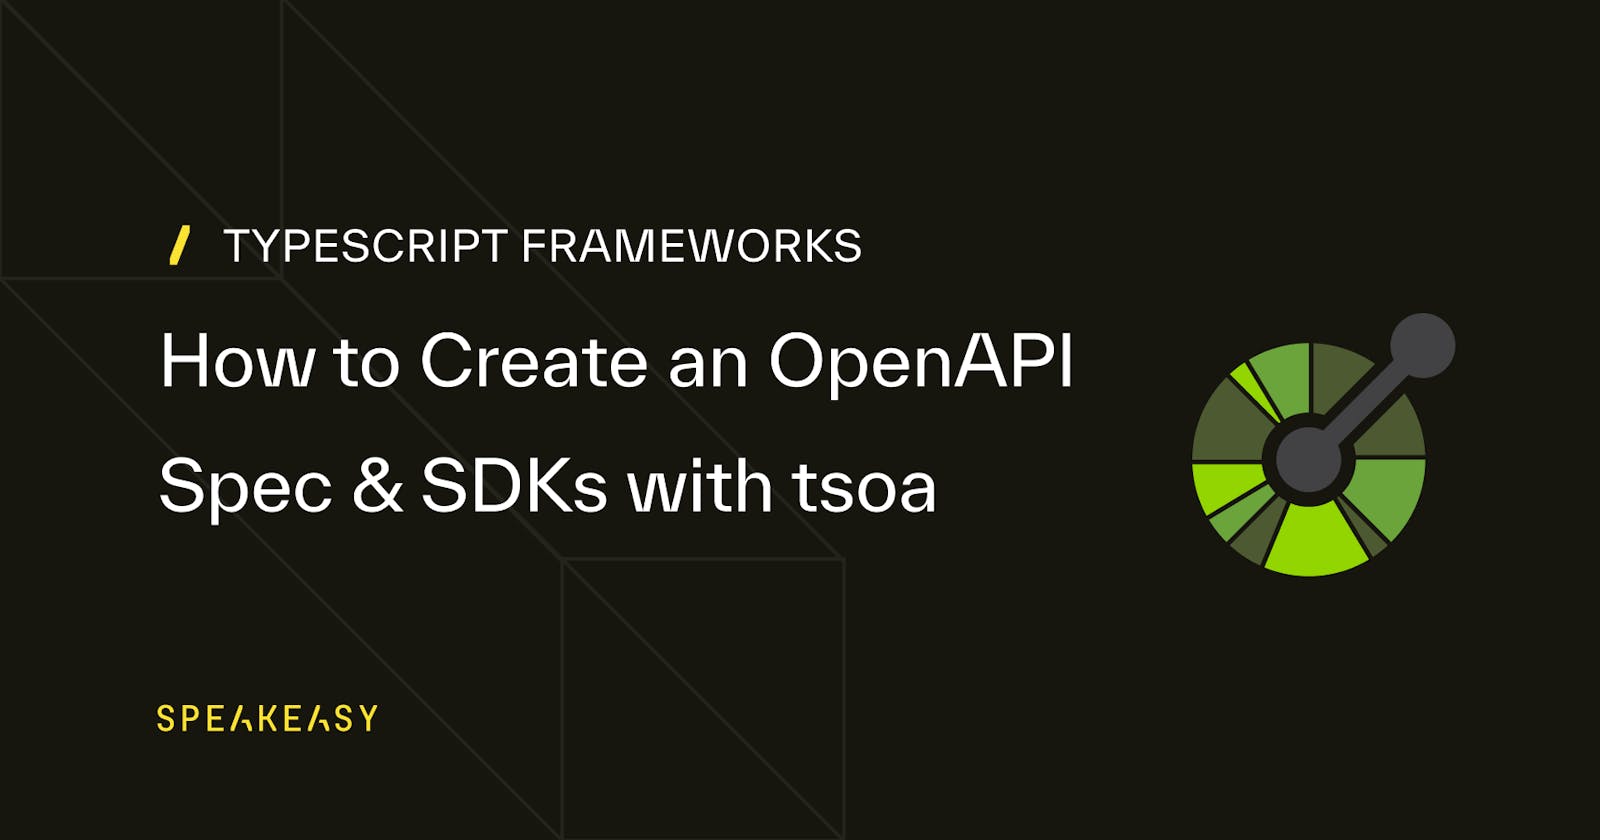 How to Create an OpenAPI Spec & SDKs with tsoa